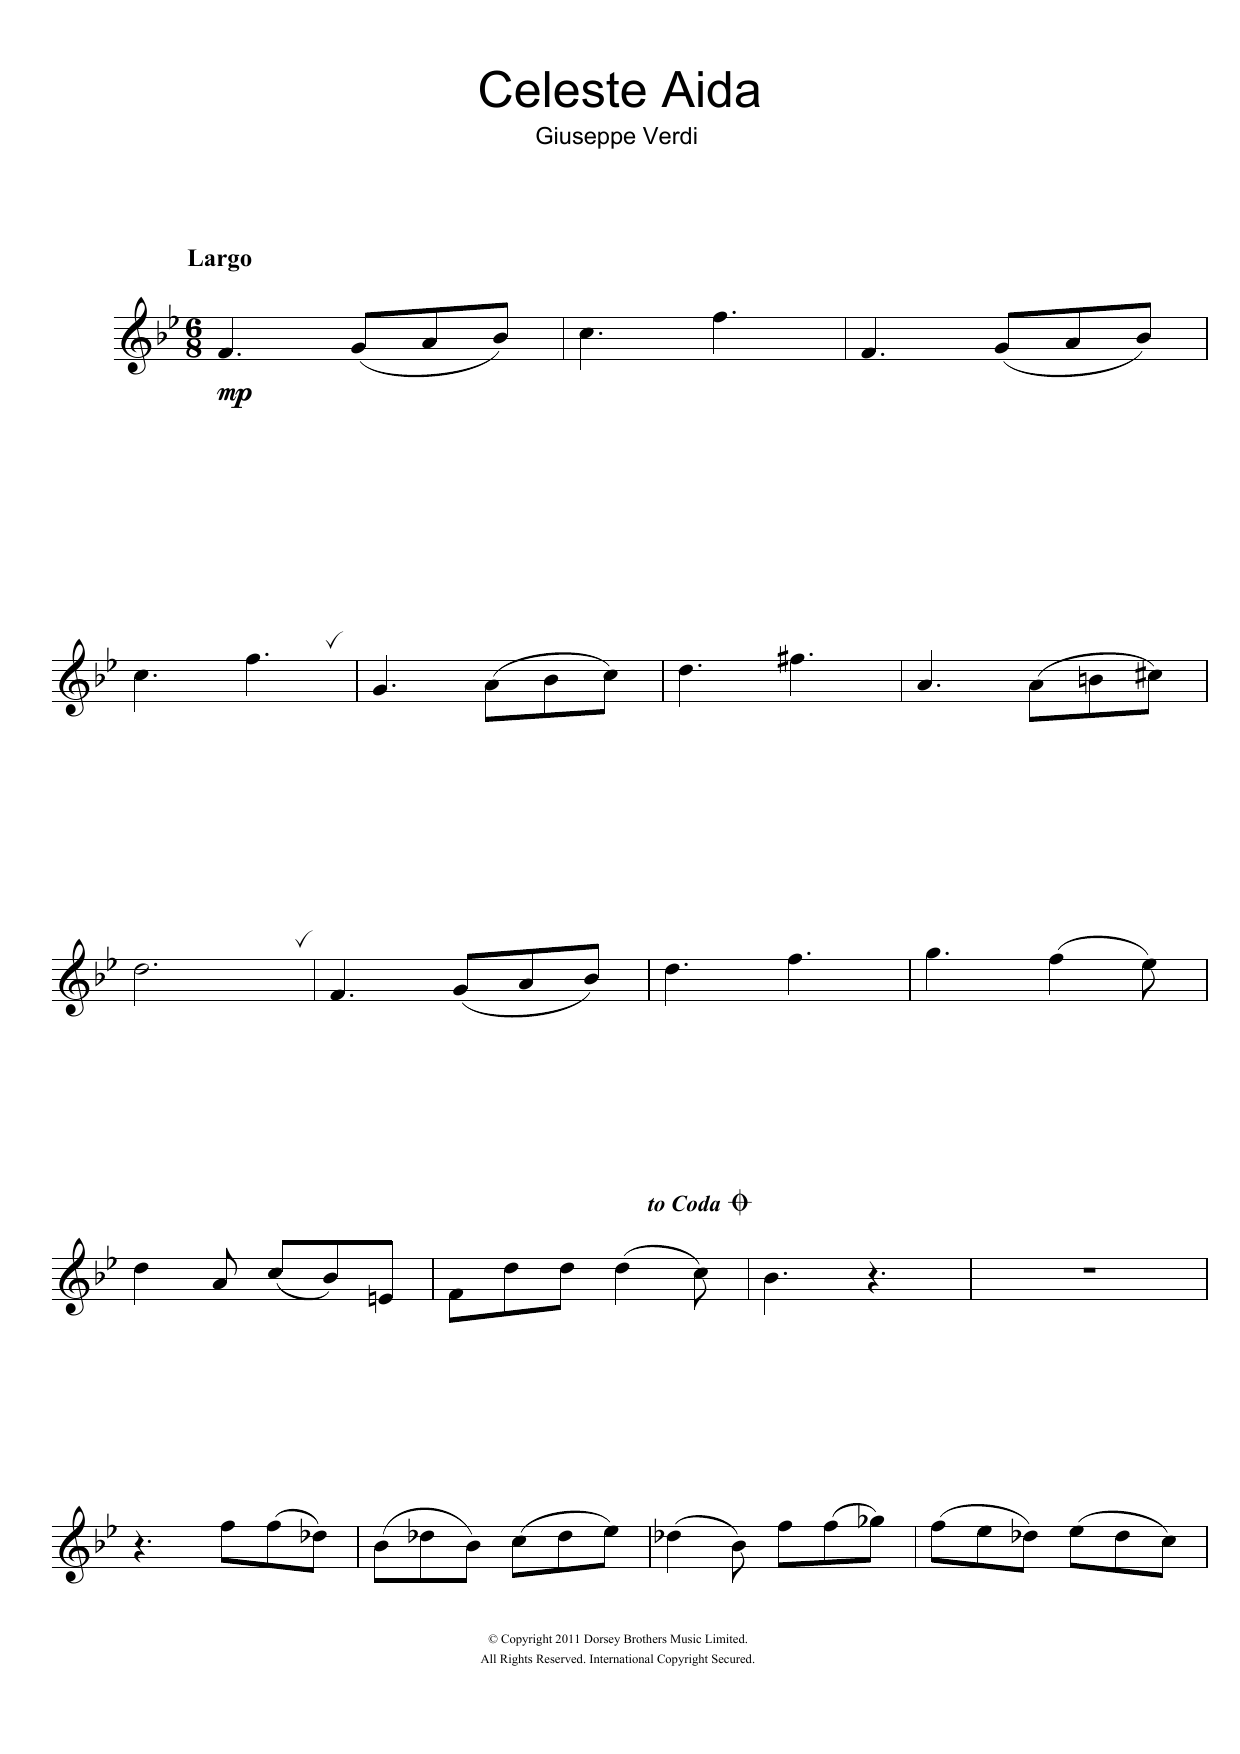 Giuseppe Verdi Celeste Aida (from Aida) Sheet Music Notes & Chords for Flute - Download or Print PDF